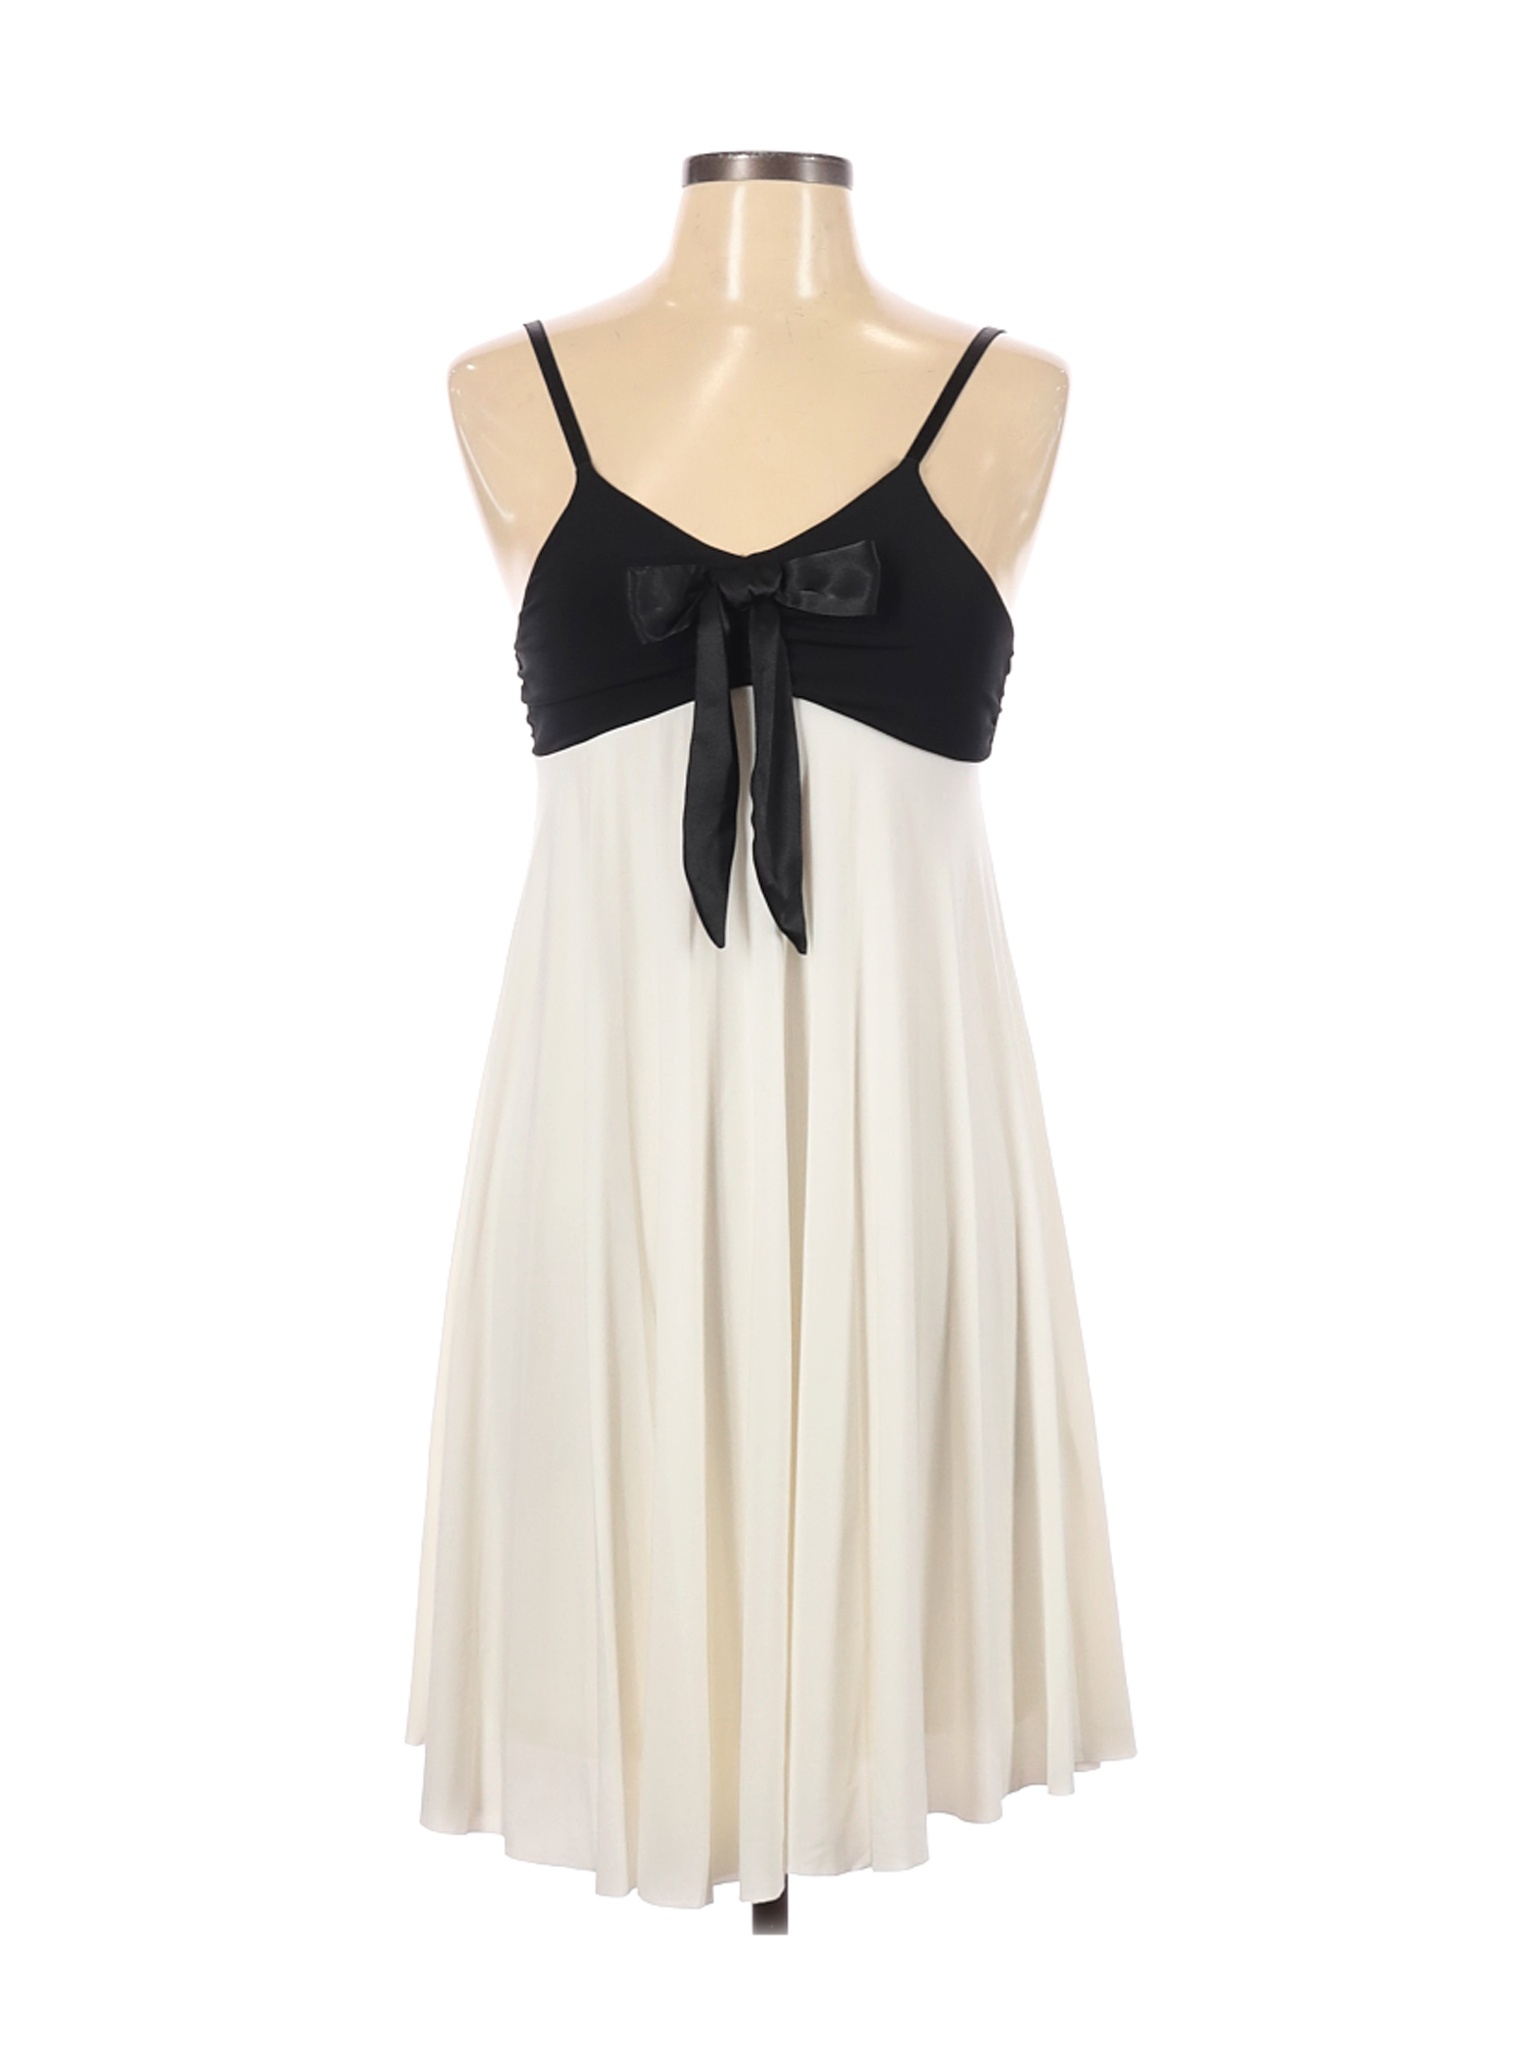 Ally B Women Ivory Cocktail Dress 16 | eBay